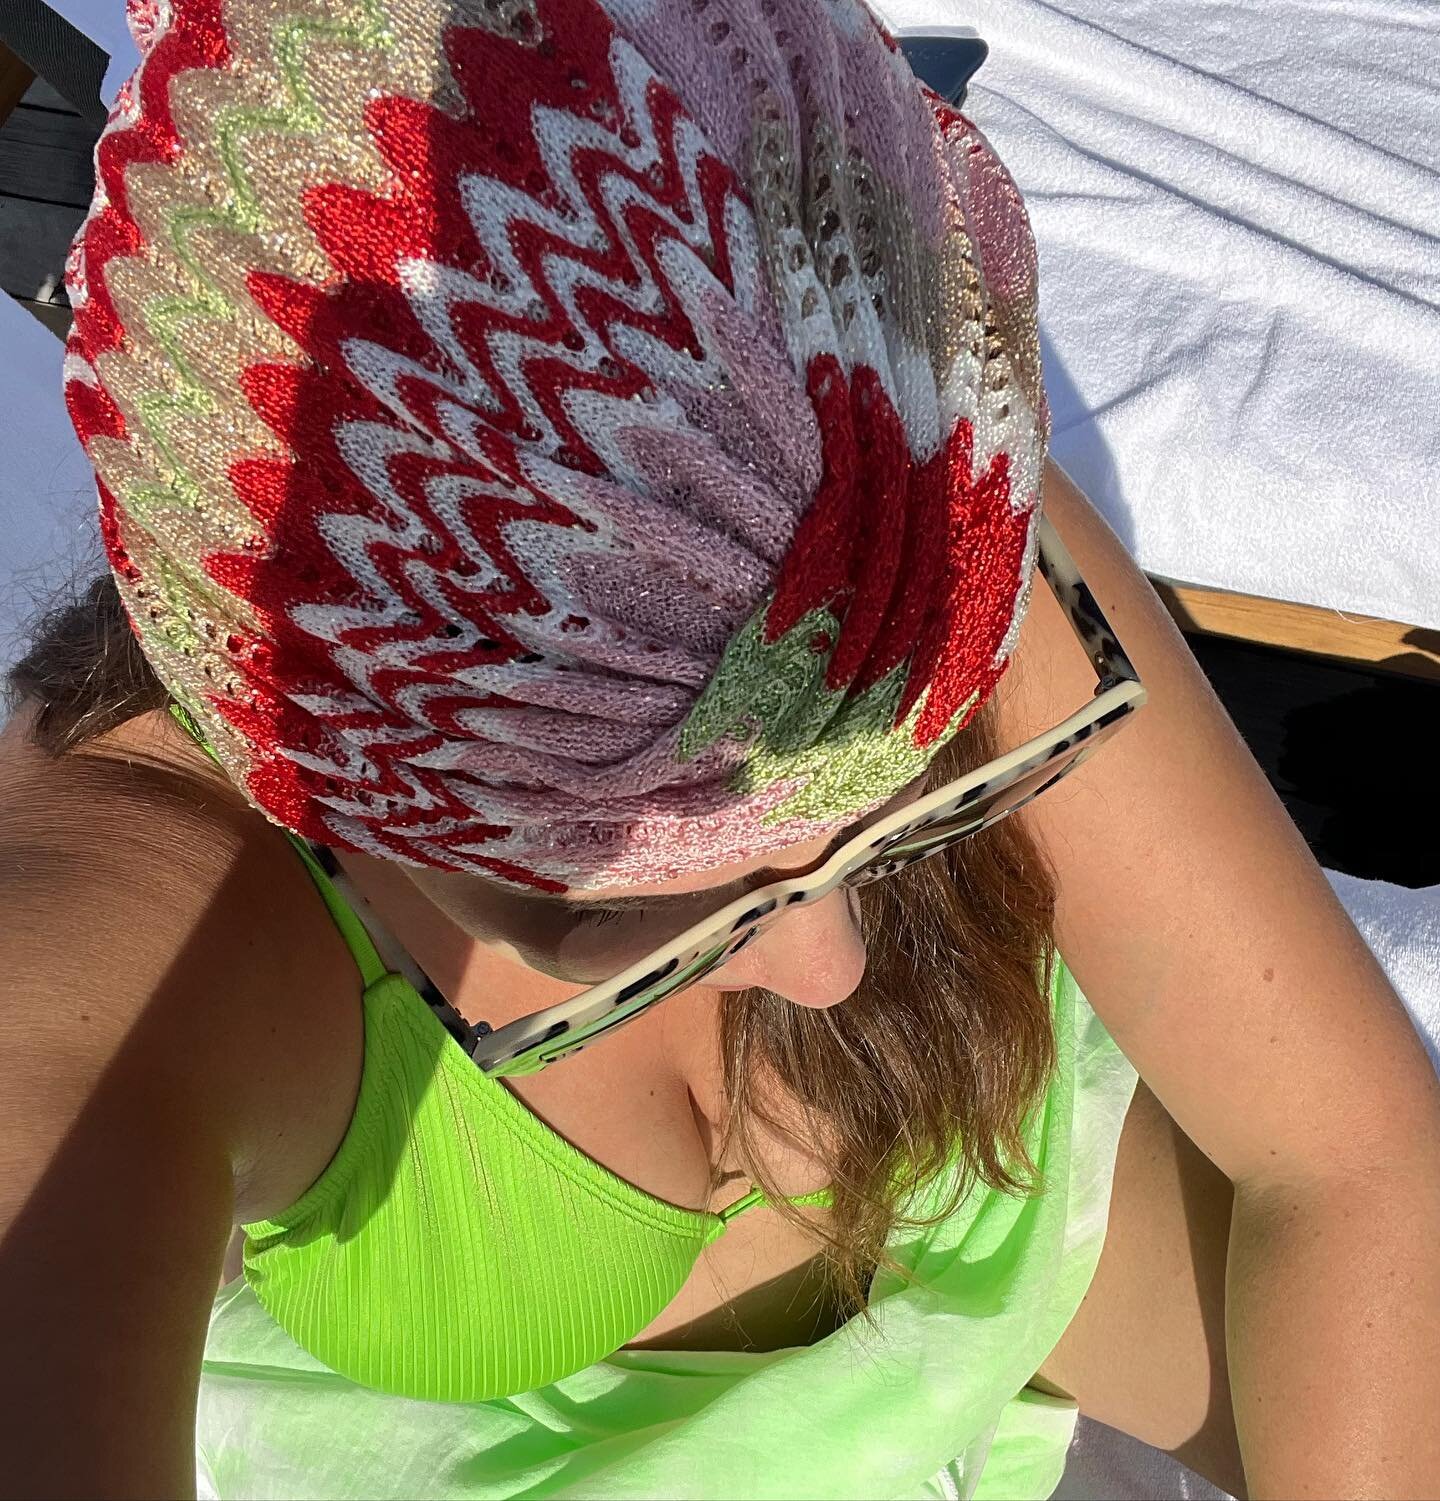 Never underestimate the power of a fab turban and a statement pair of sunnies. 
@missoni @seeeyewear 
#fashionlessons #hawaii #sunnystyle #livingincolor #missoni #seeeyewear #jennawhite